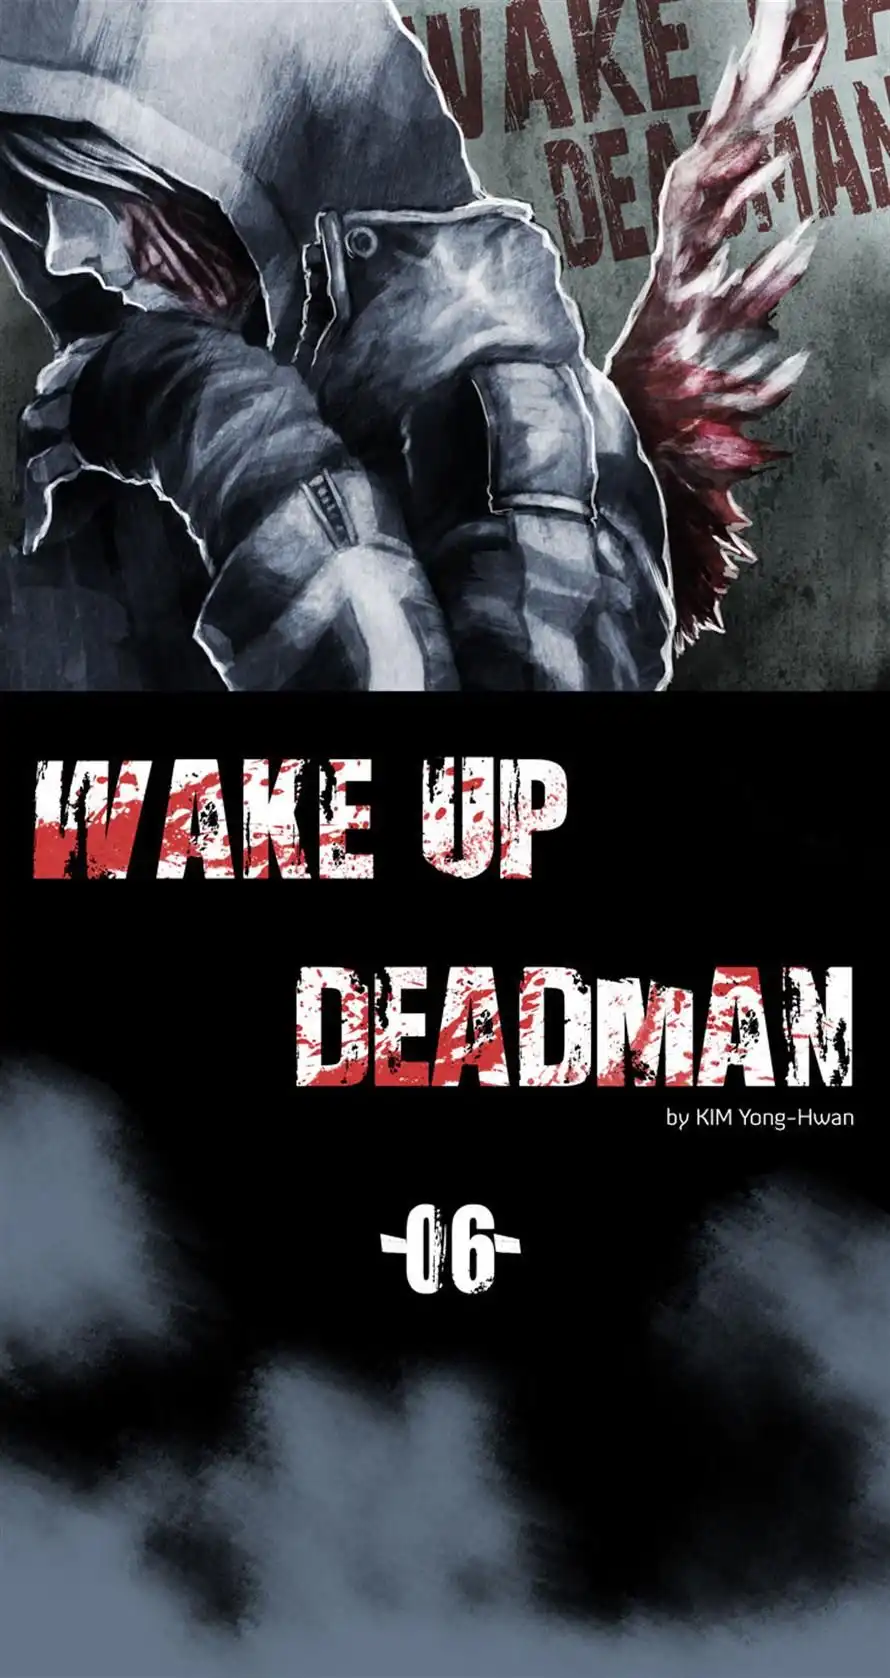 Wake Up Deadman Chapter 6